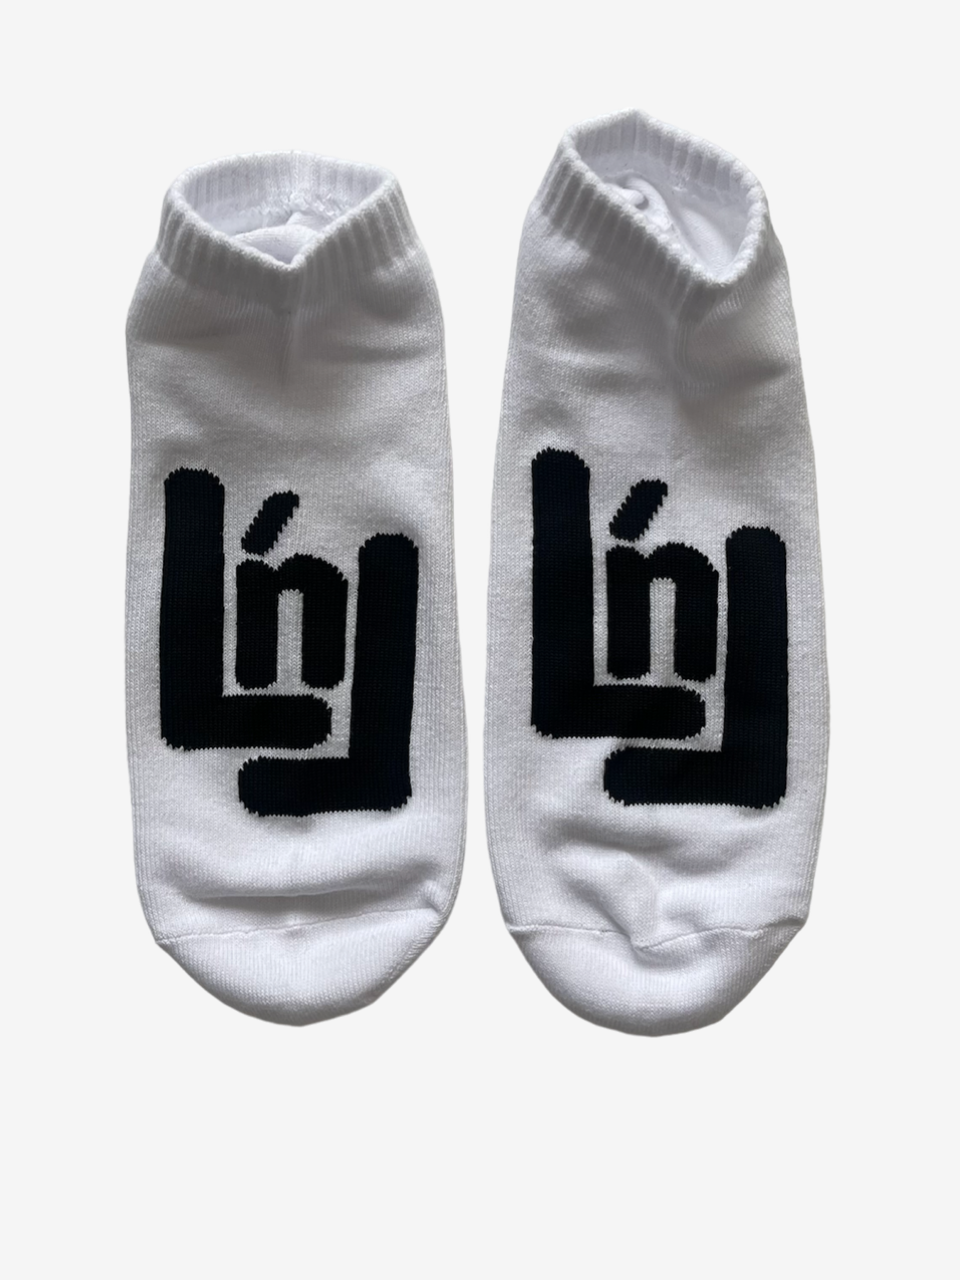 LnL Low-Cut Socks 3-Pack (Black / White / Grey)